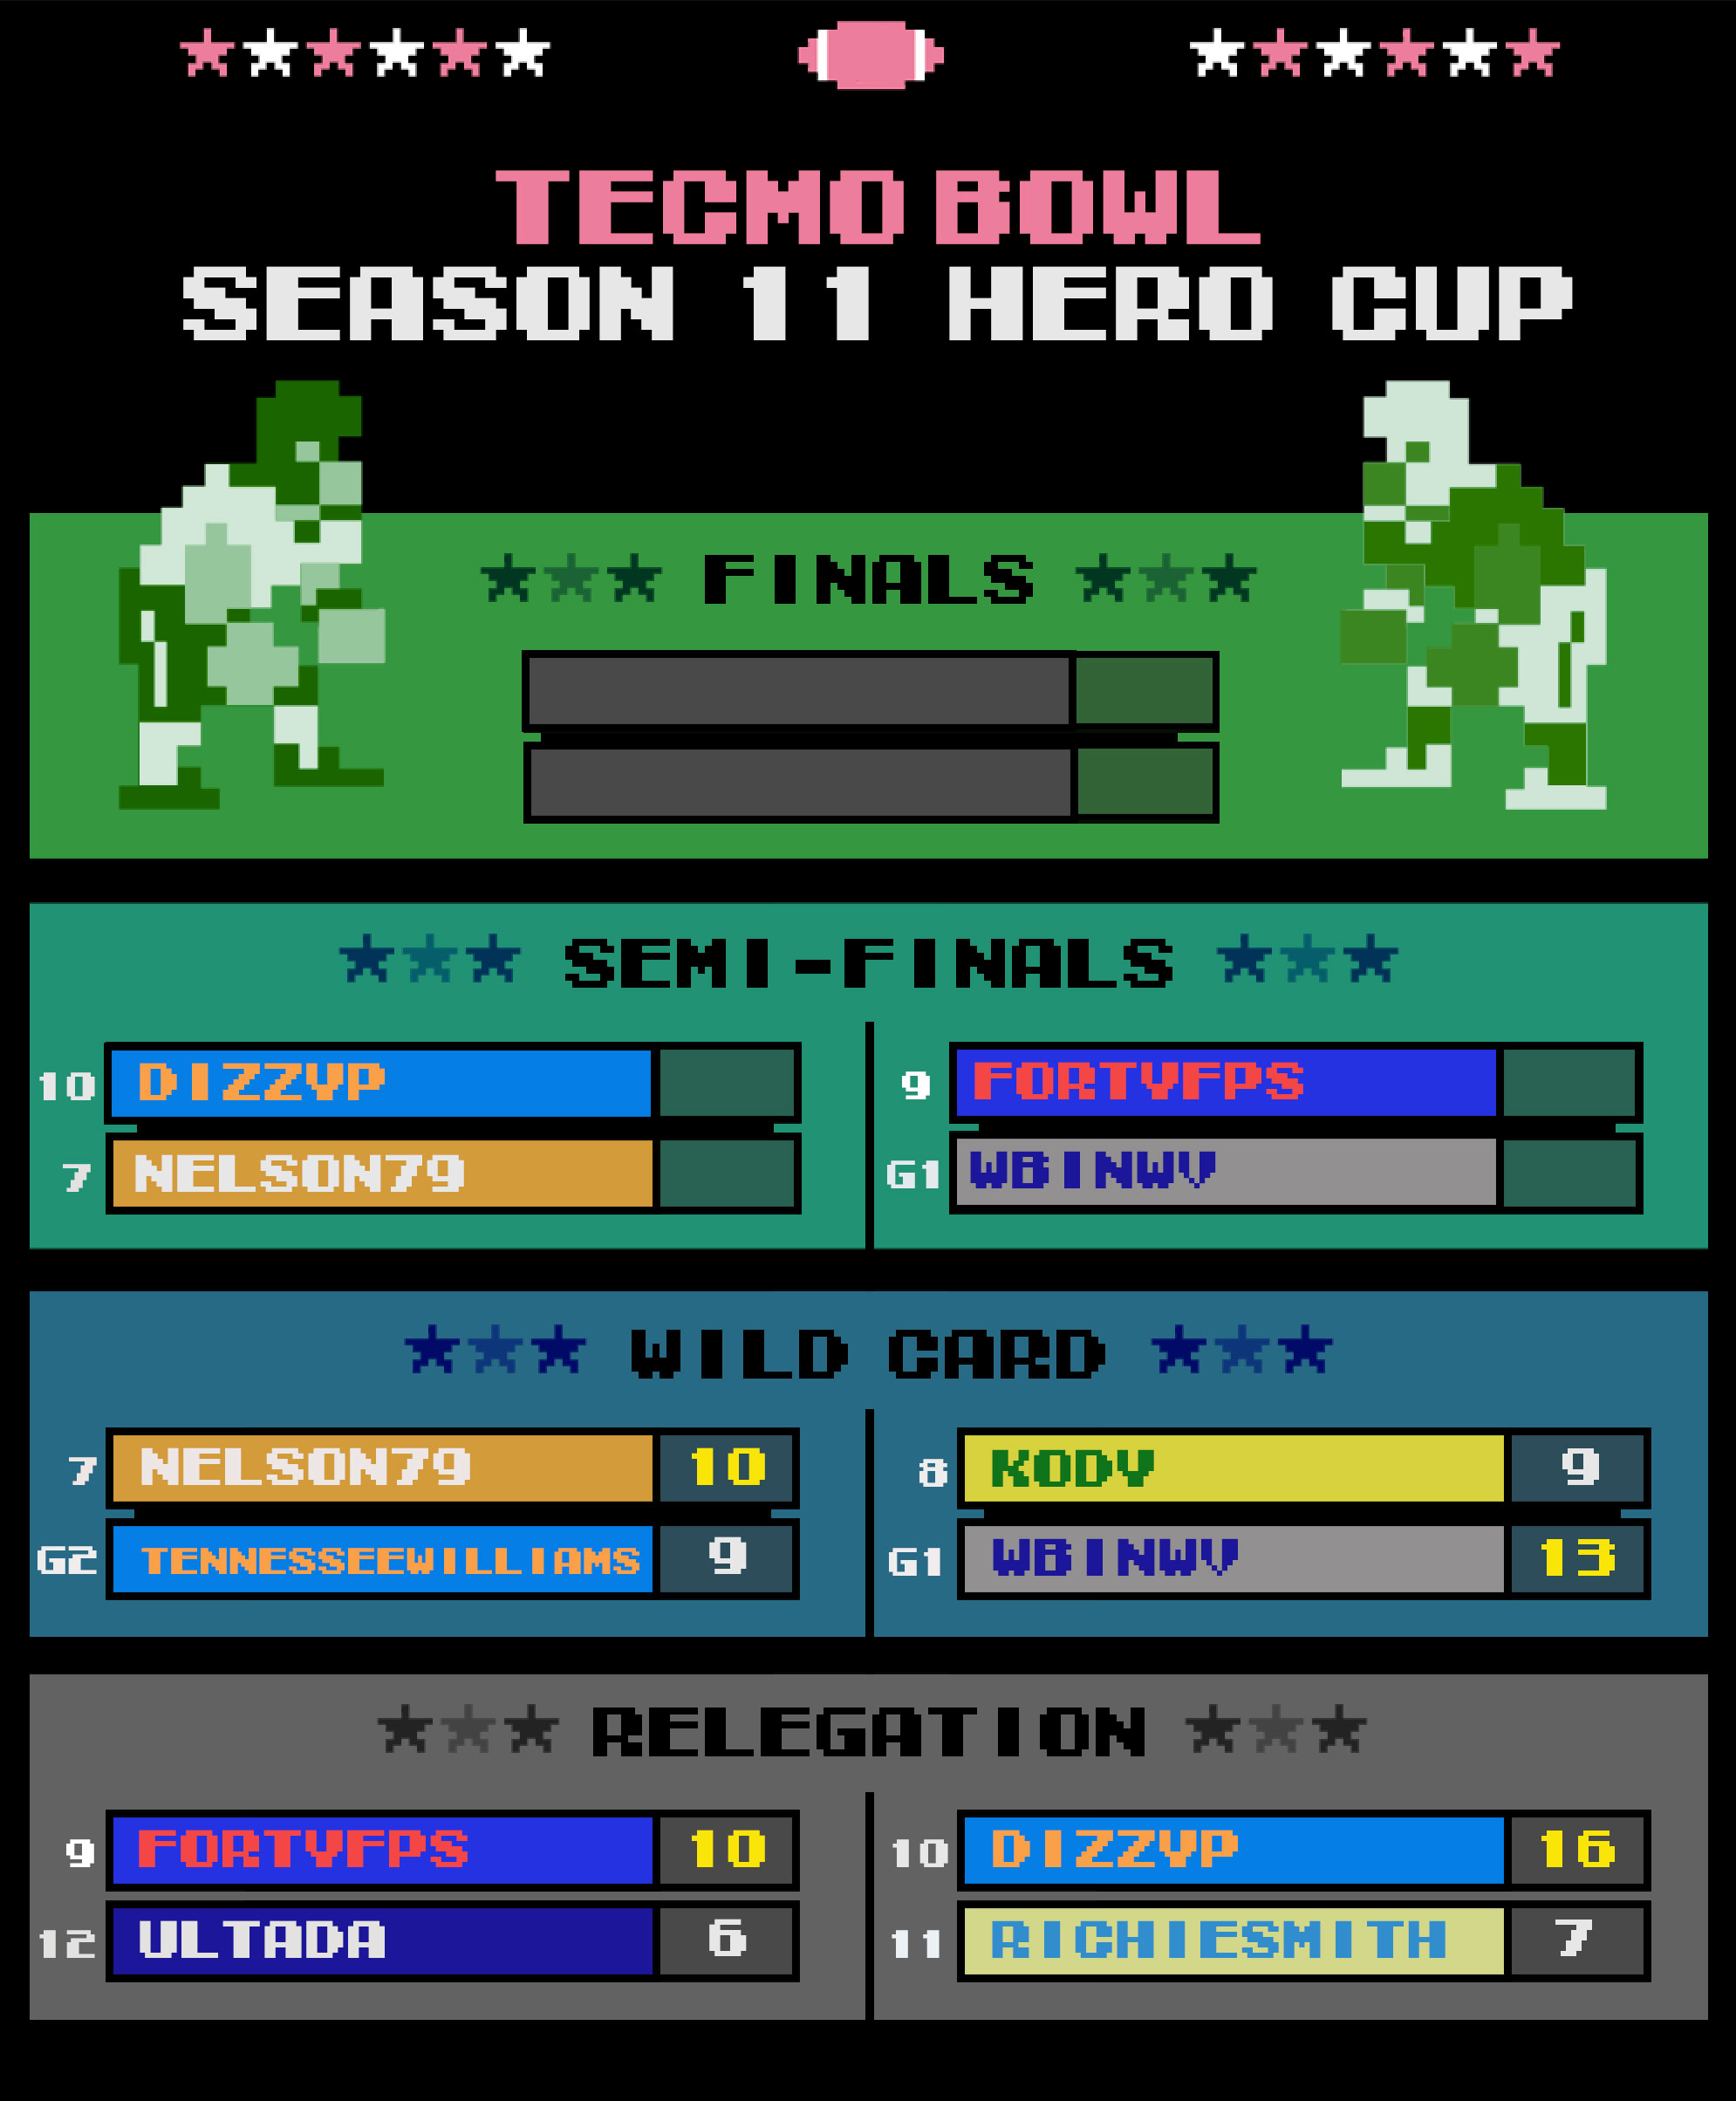 Season 11 Hero Cup | Tecmo Bowl League